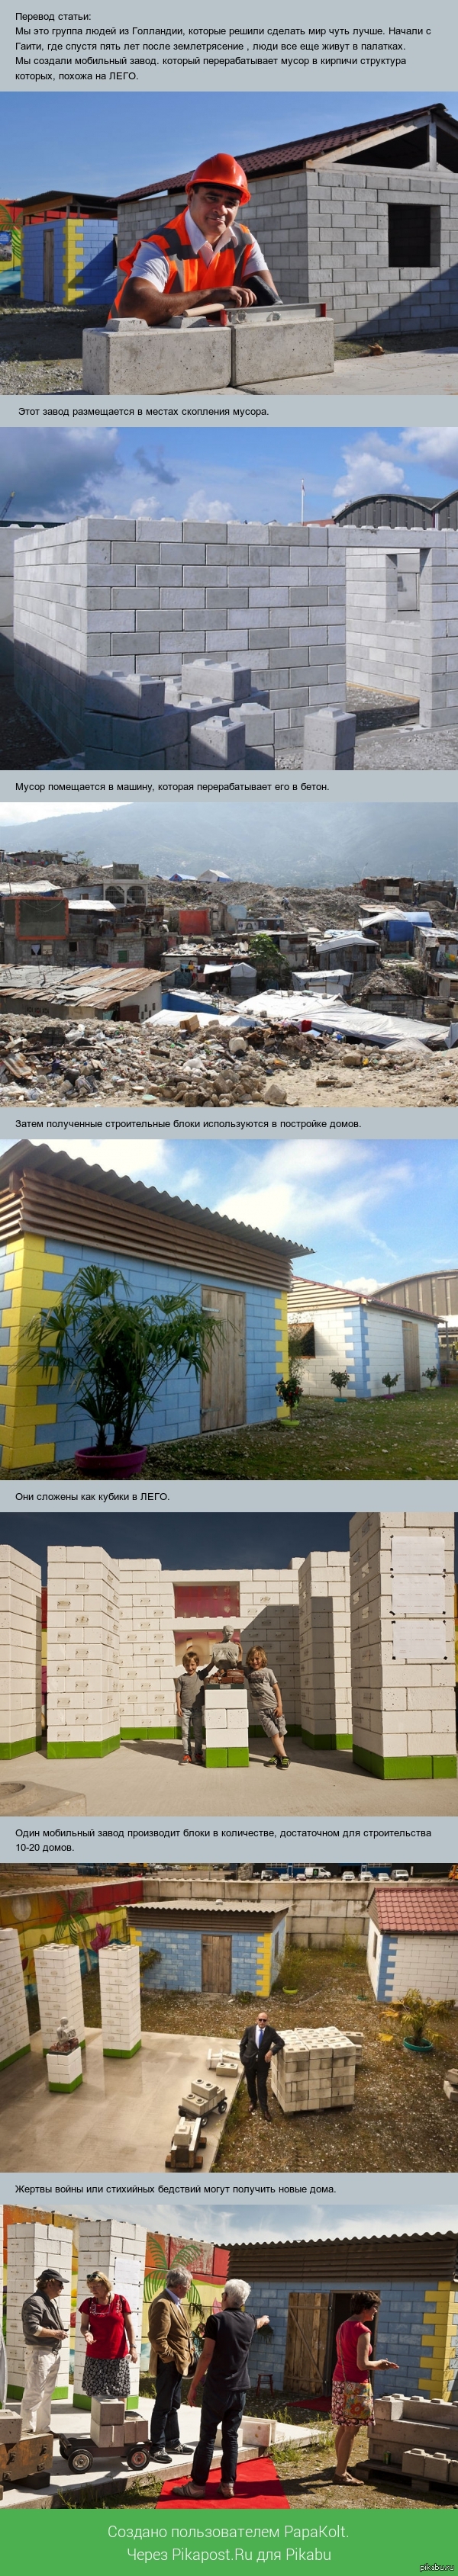 Как из мусора строят дома. http://www.boredpanda.com/disaster-debris-new-houses-the-mobile-factory/